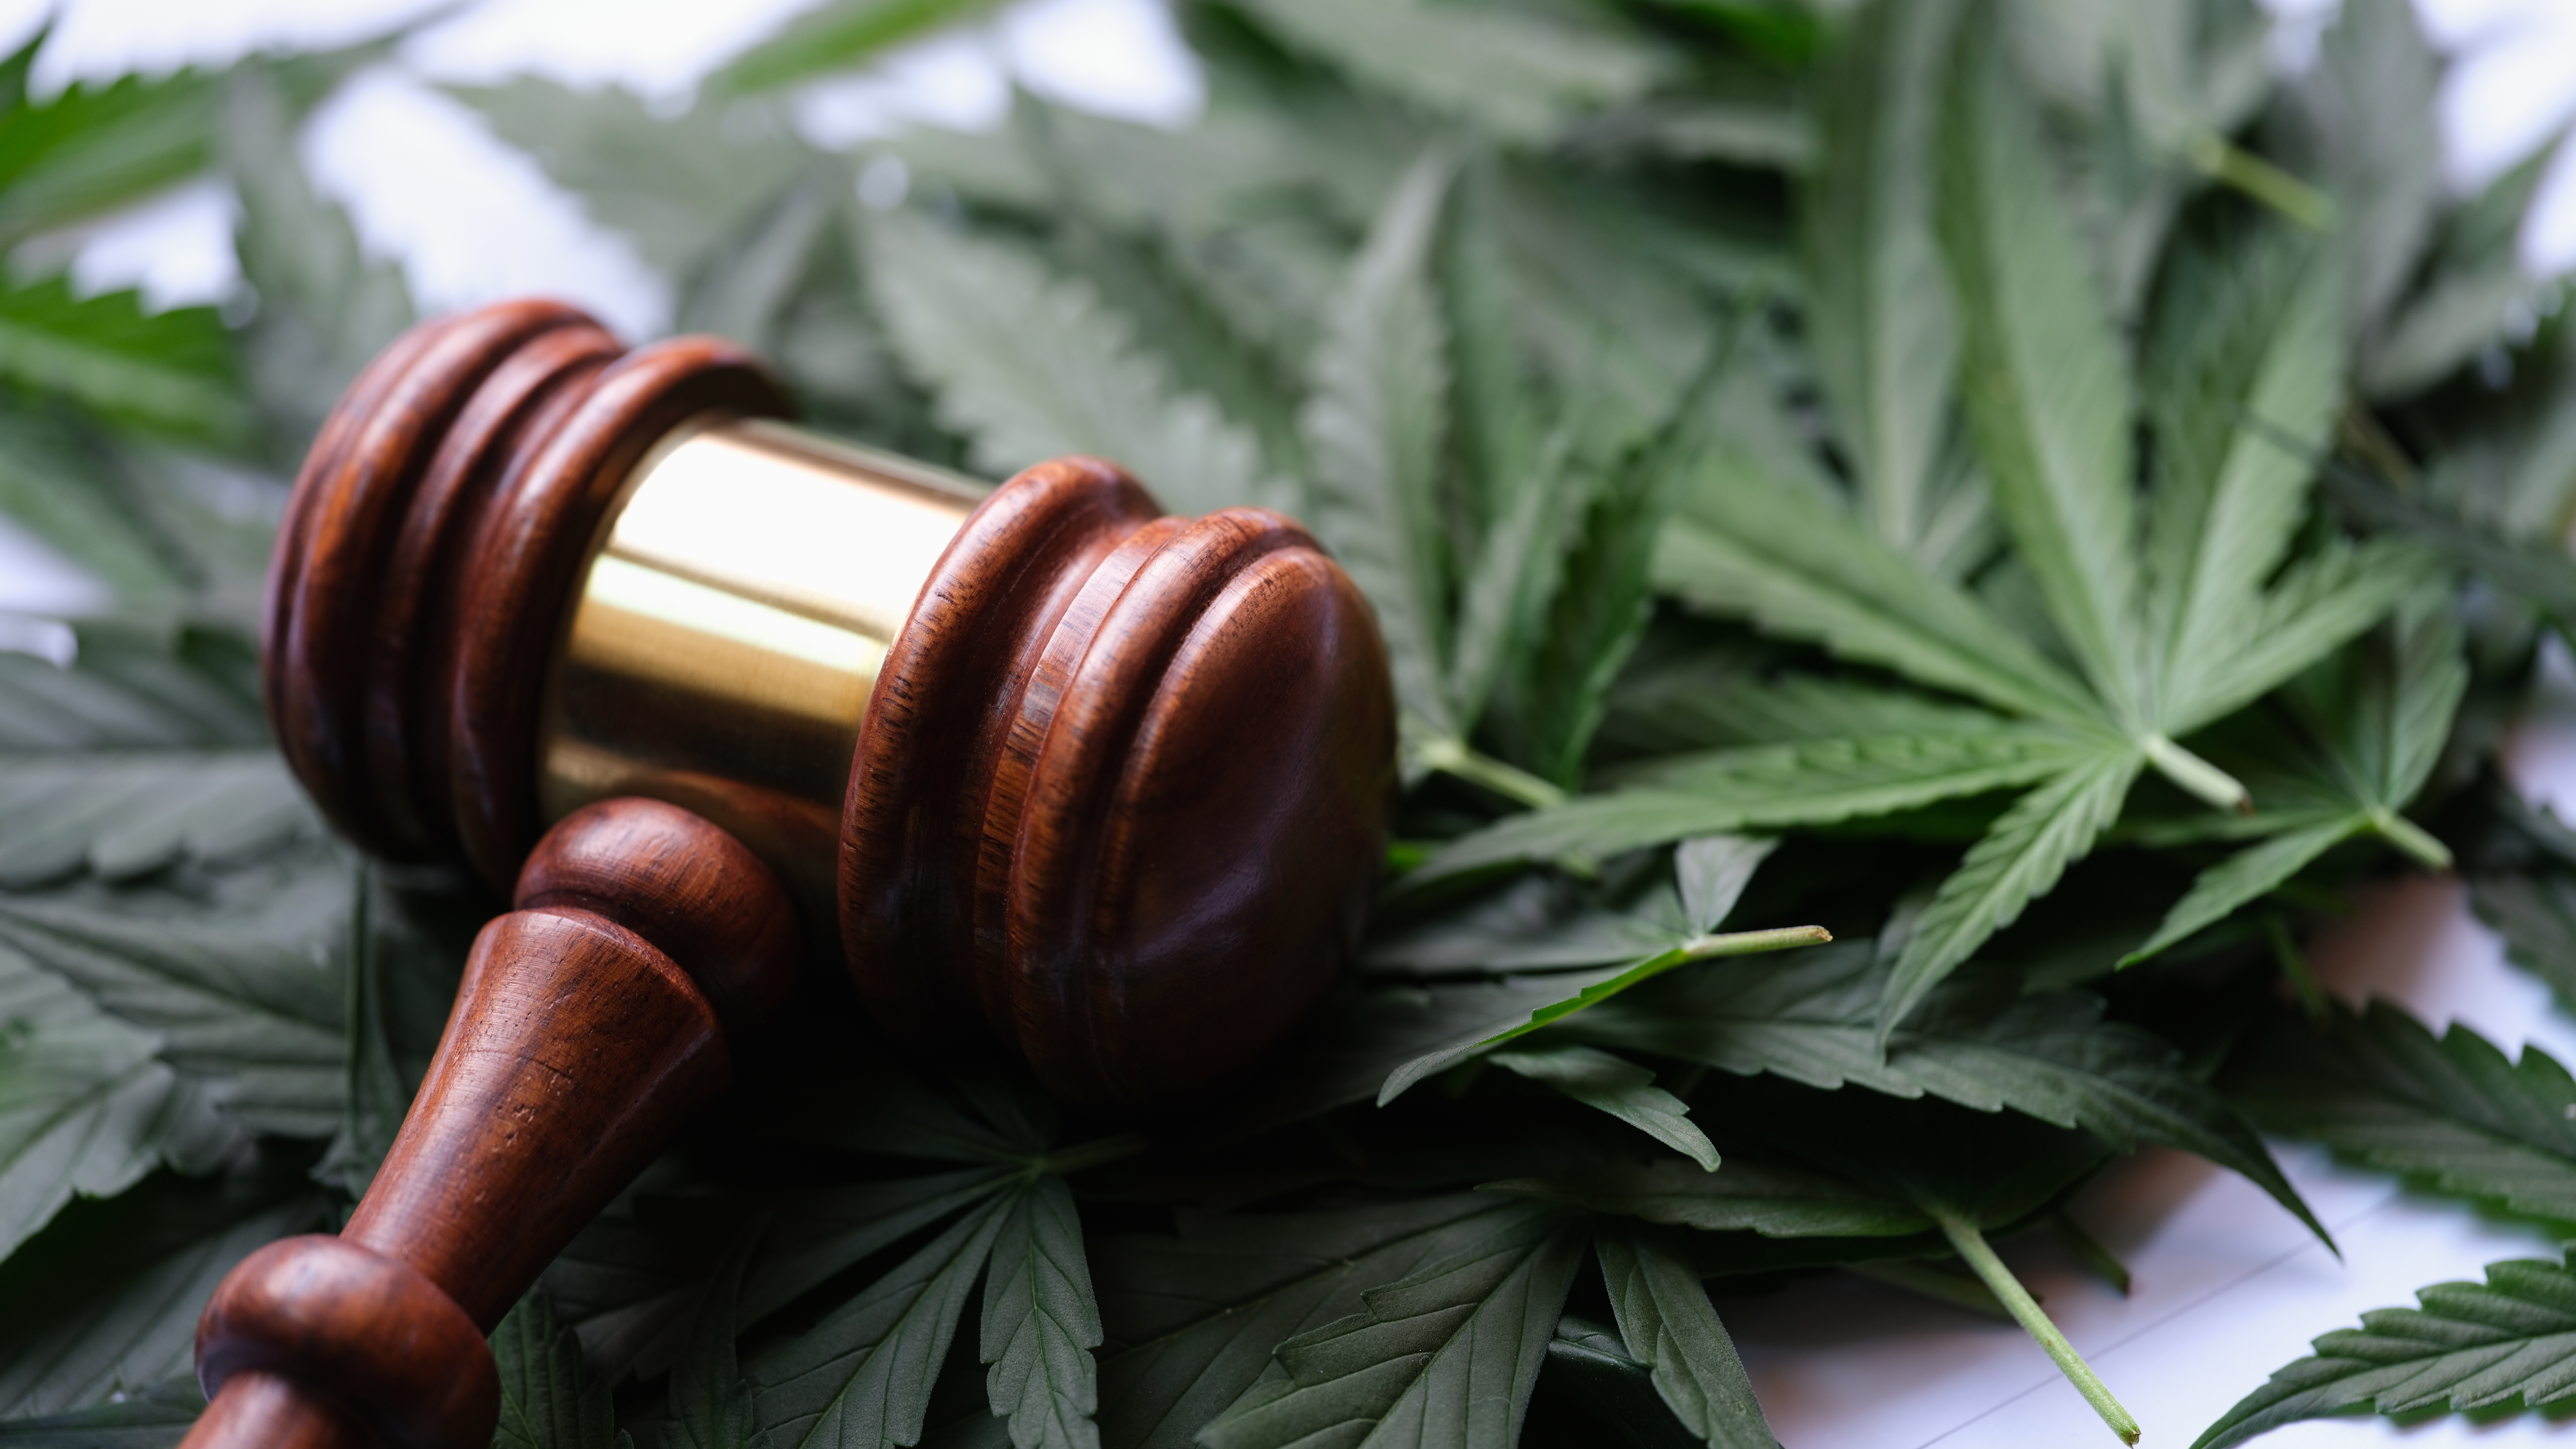 Gavel with weed - Marijuana Legalization Good or Bad Concept Image